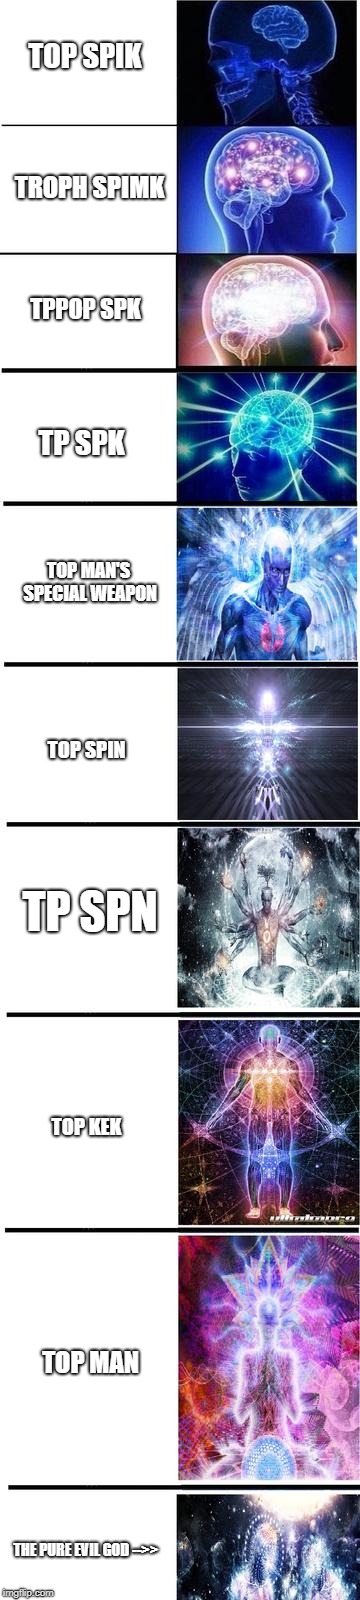 expanding brain | TOP SPIK; TROPH SPIMK; TPPOP SPK; TP SPK; TOP MAN'S SPECIAL WEAPON; TOP SPIN; TP SPN; TOP KEK; TOP MAN; THE PURE EVIL GOD -->> | image tagged in expanding brain,topman,megaman3,megaman,topspin,topspik | made w/ Imgflip meme maker